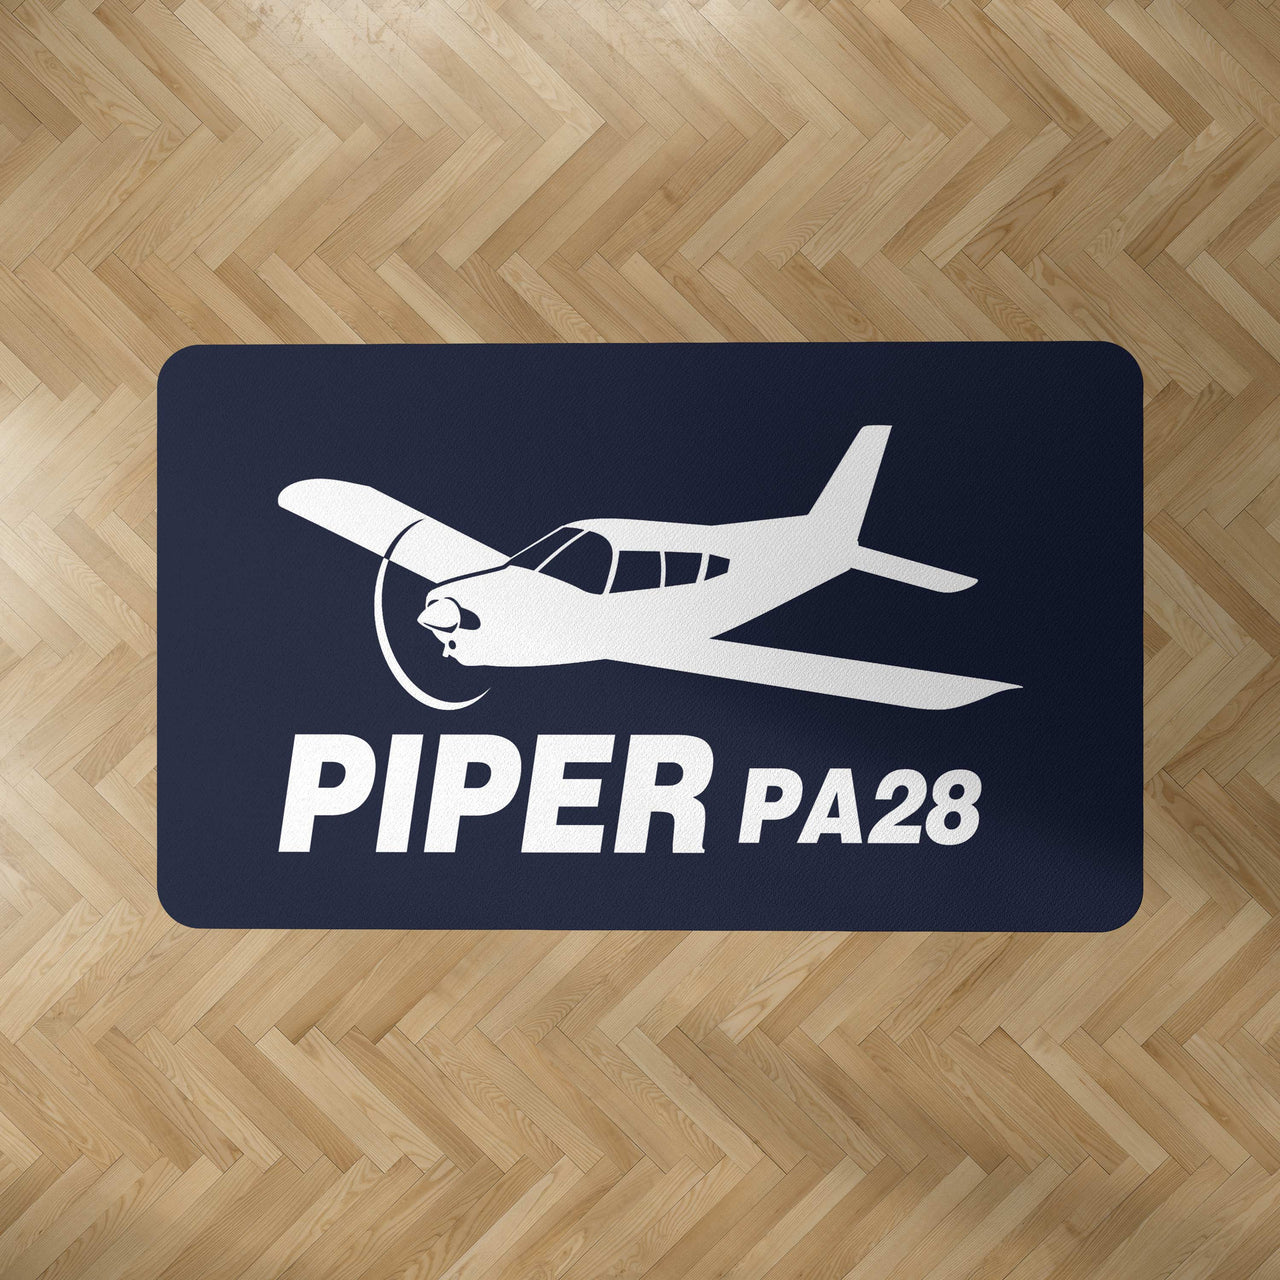 The Piper PA28 Designed Carpet & Floor Mats